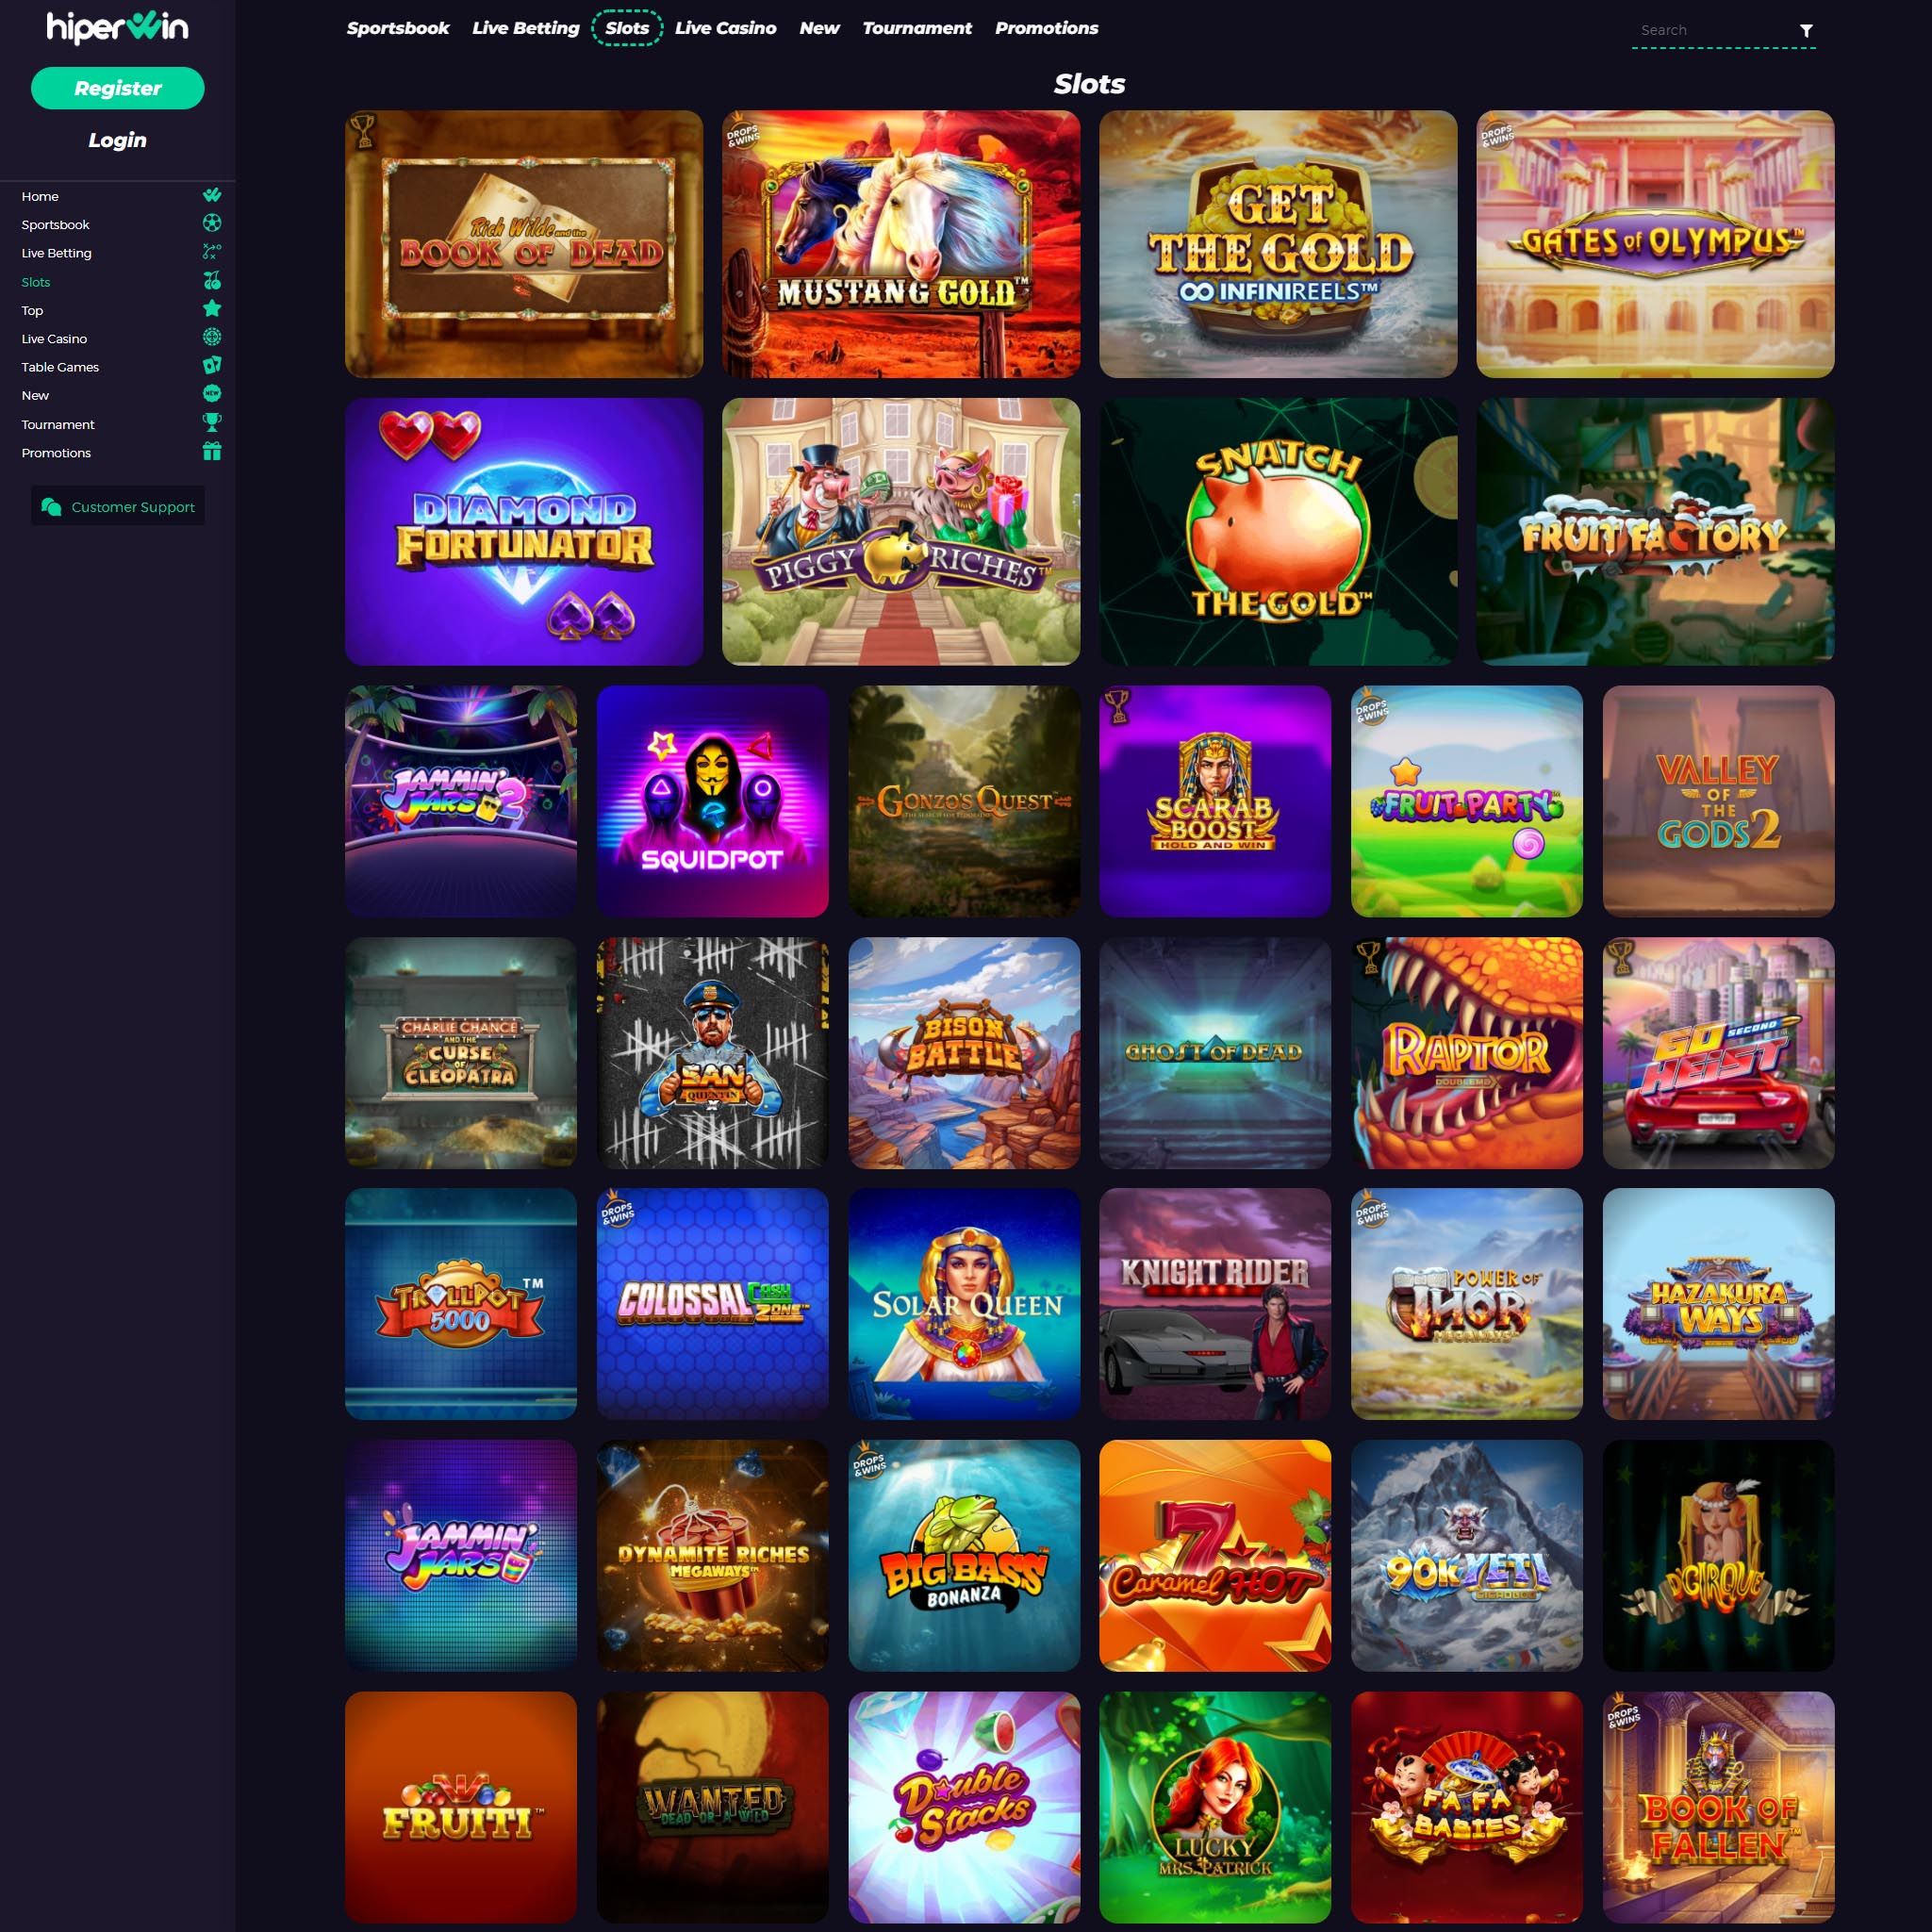 Hiperwin Casino full games catalogue